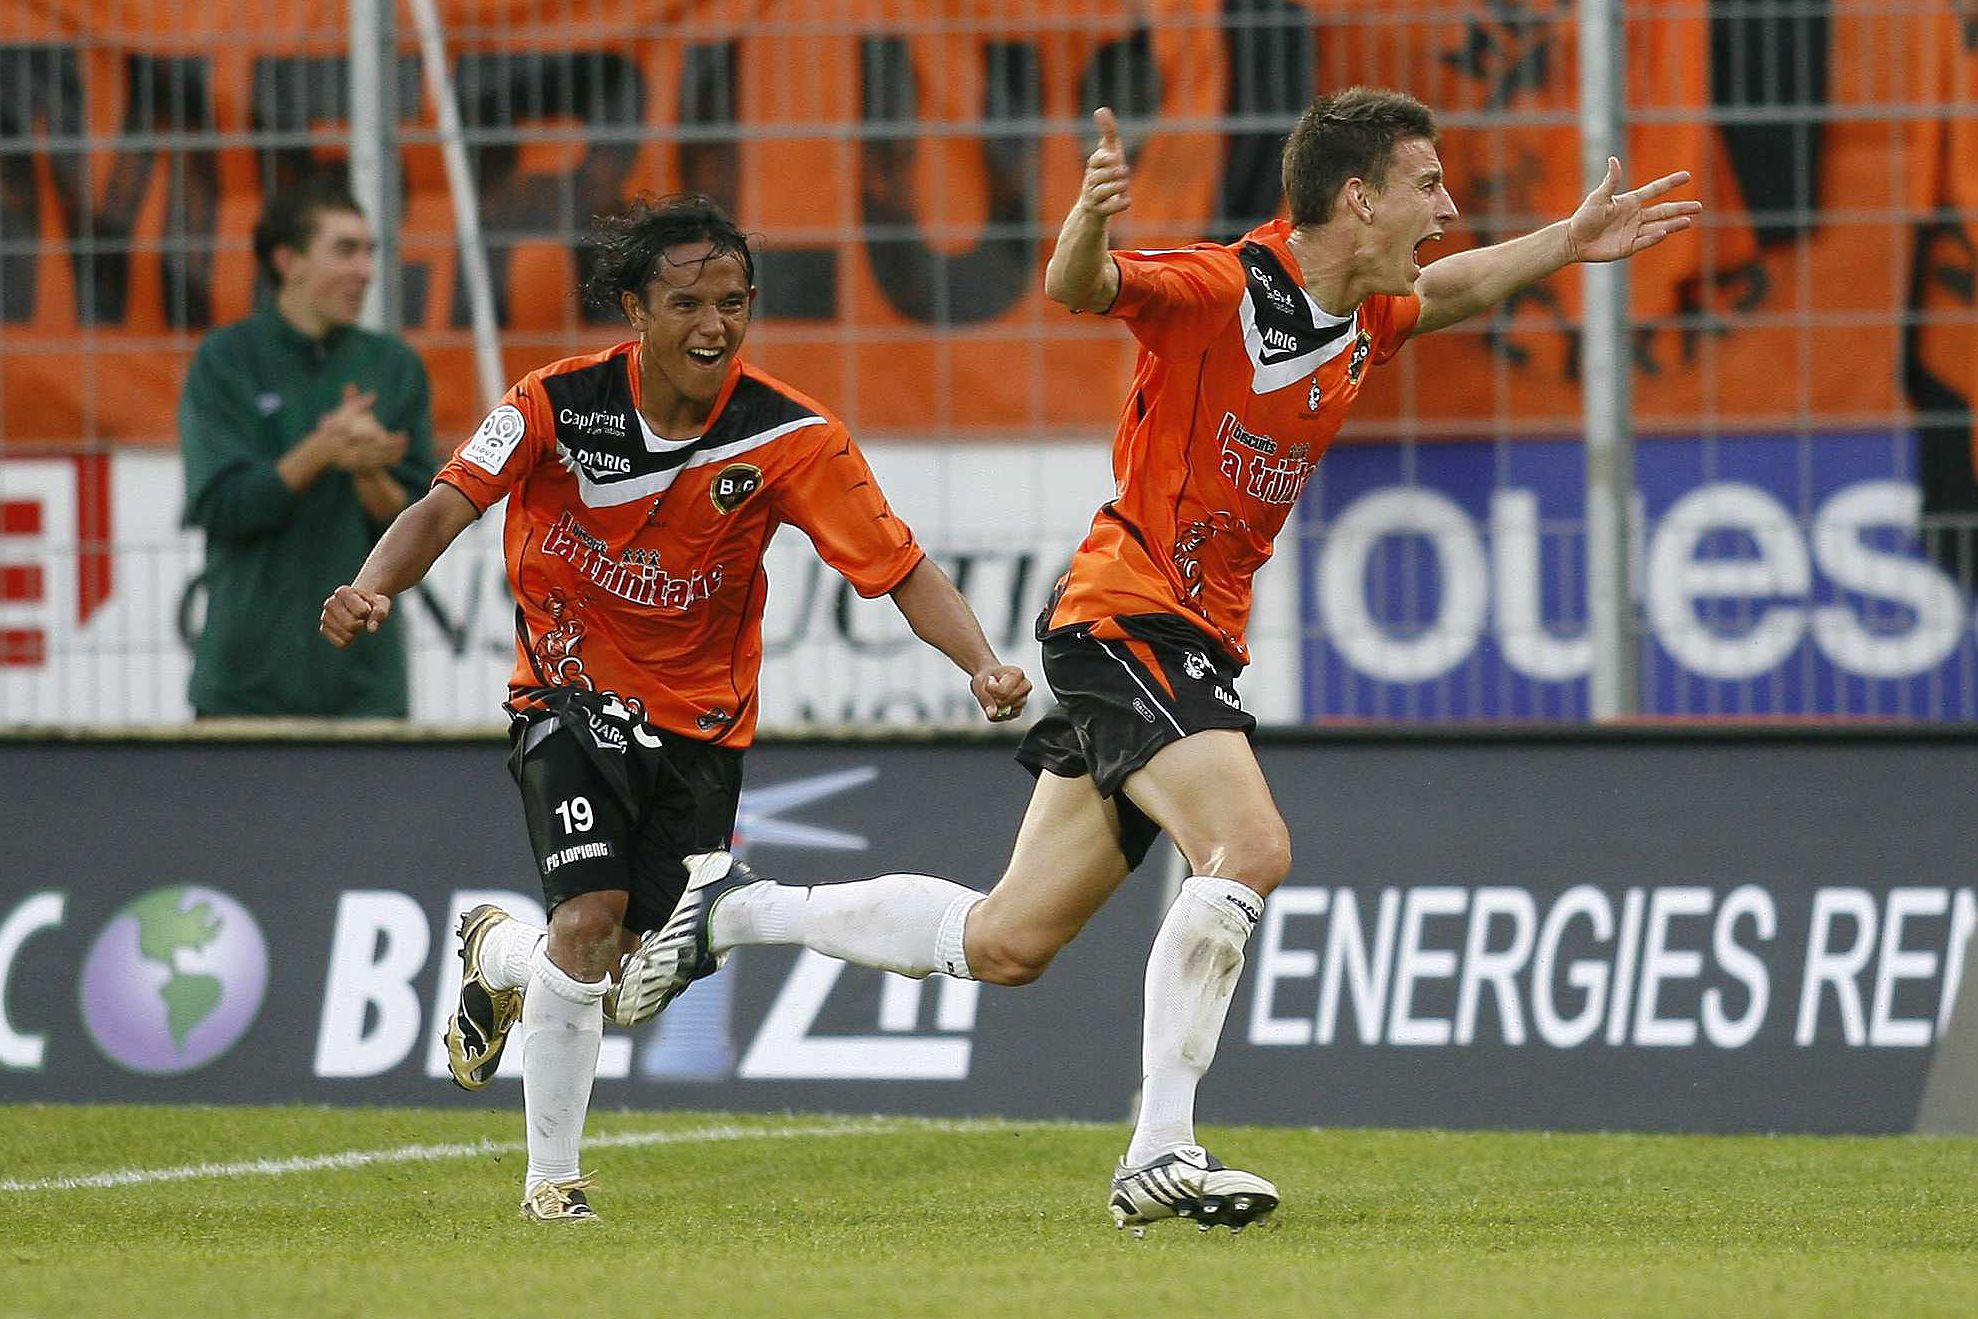 Laurent KOSCIELNY - 15.08.2009 - Lorient / Montpellier - 2eme journee de Ligue 1
Photo